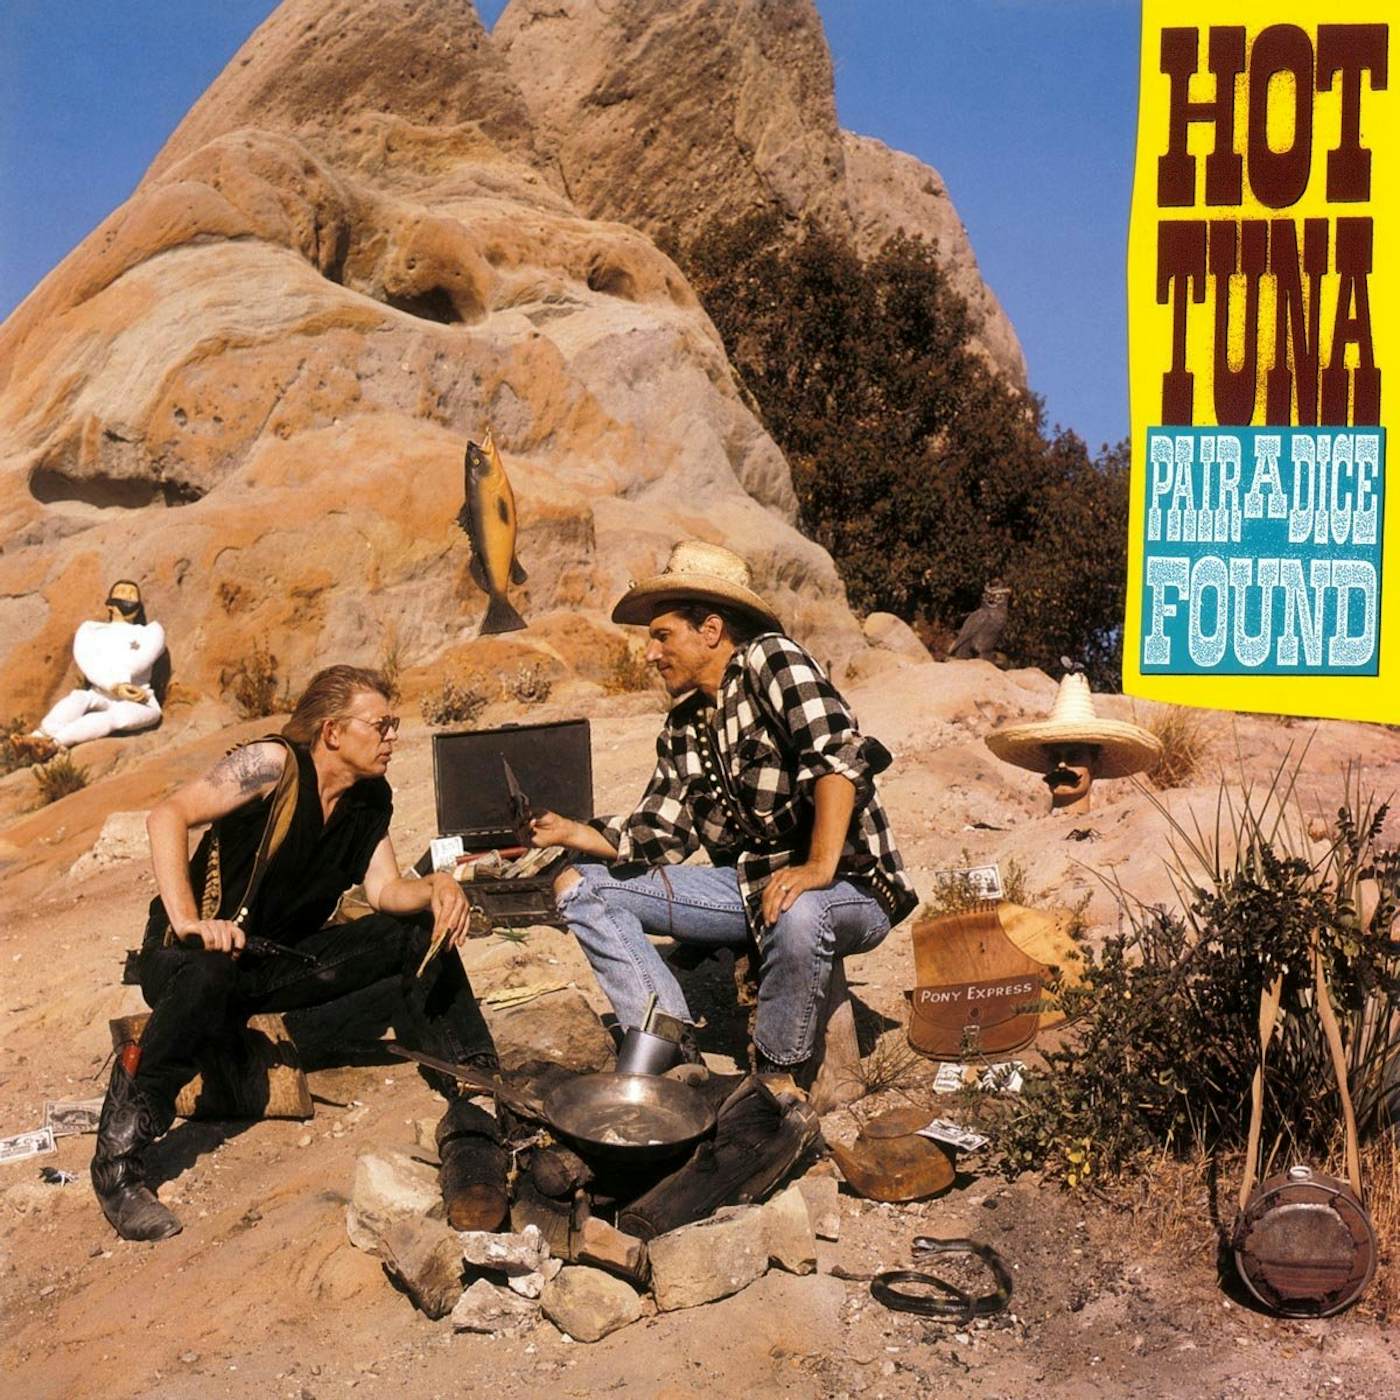 Hot Tuna Pair A Dice Found Vinyl Record